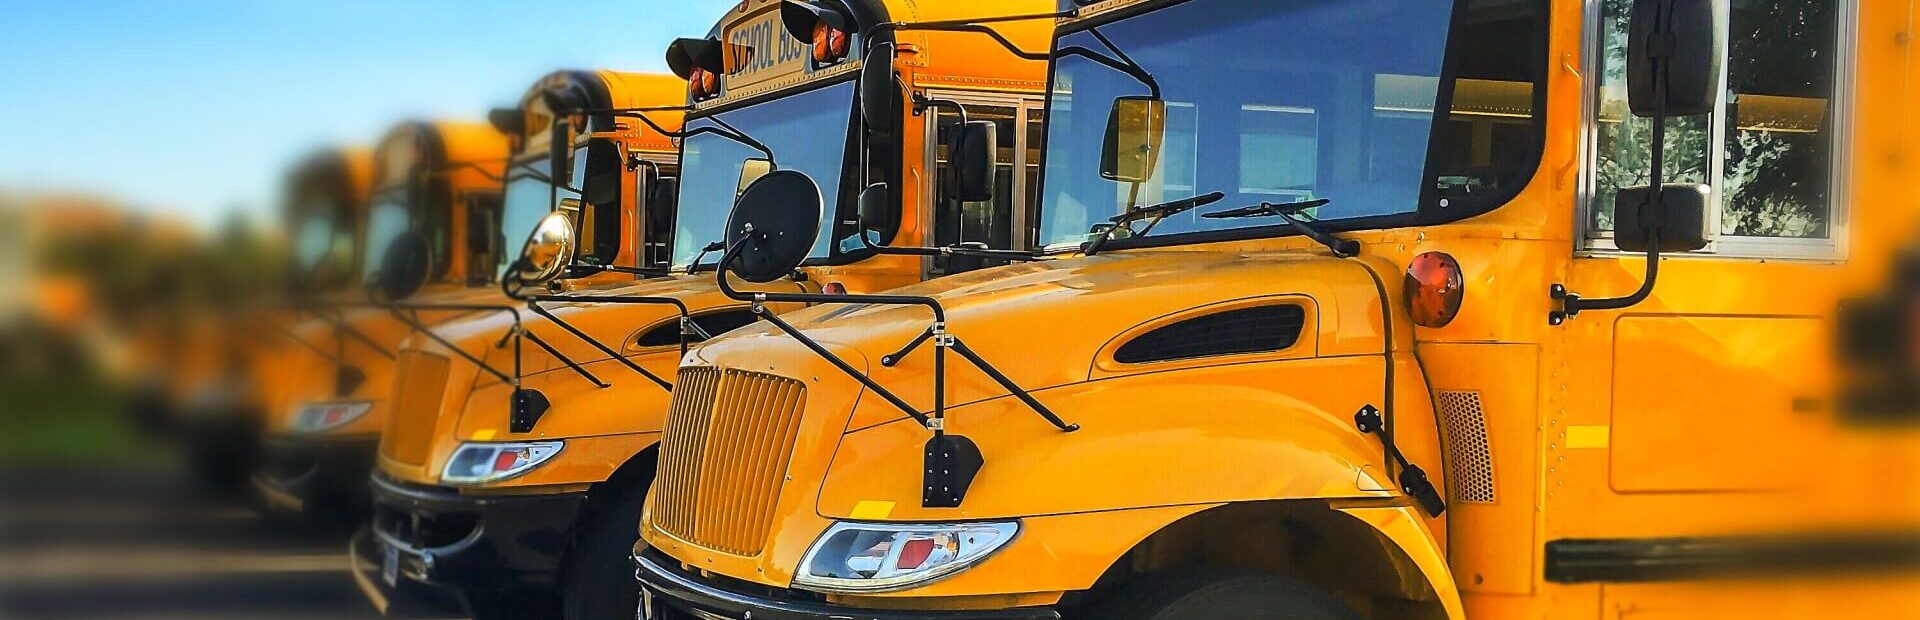 Deadly school bus crash: A fleet of school buses